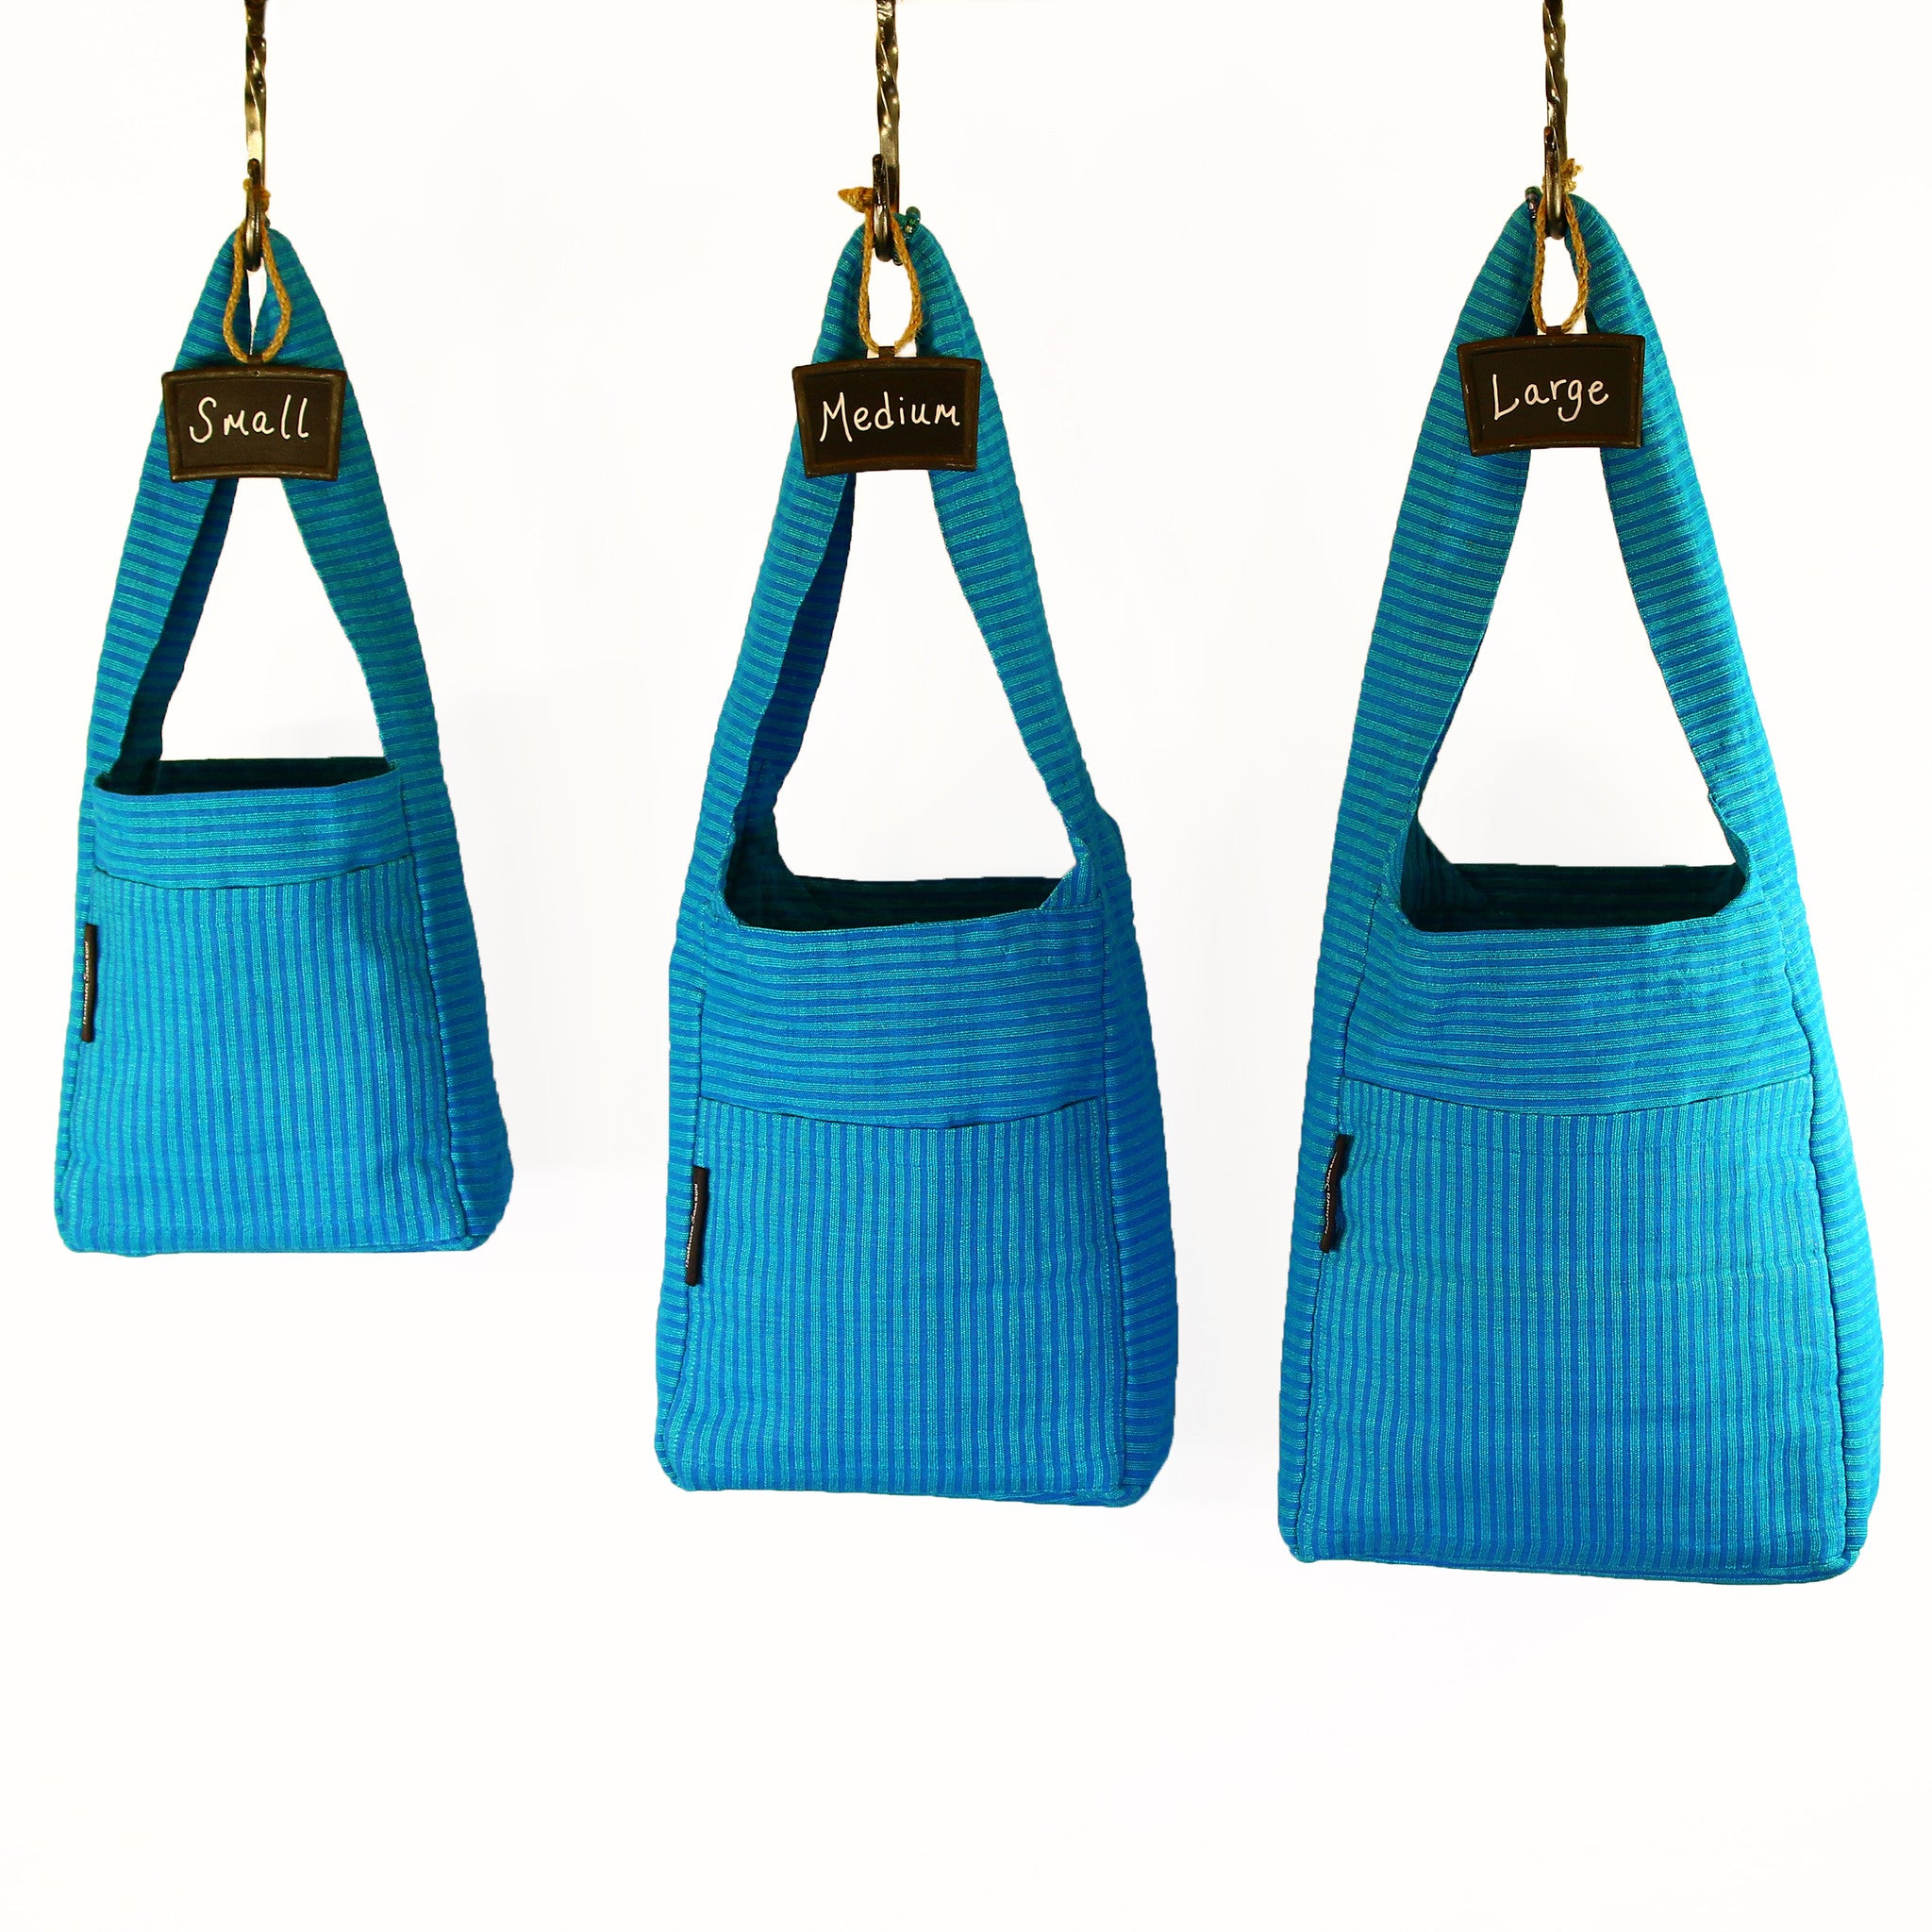 The Versatile Shoulder Bag – Azure fabric shown (small, medium, & large sizes)